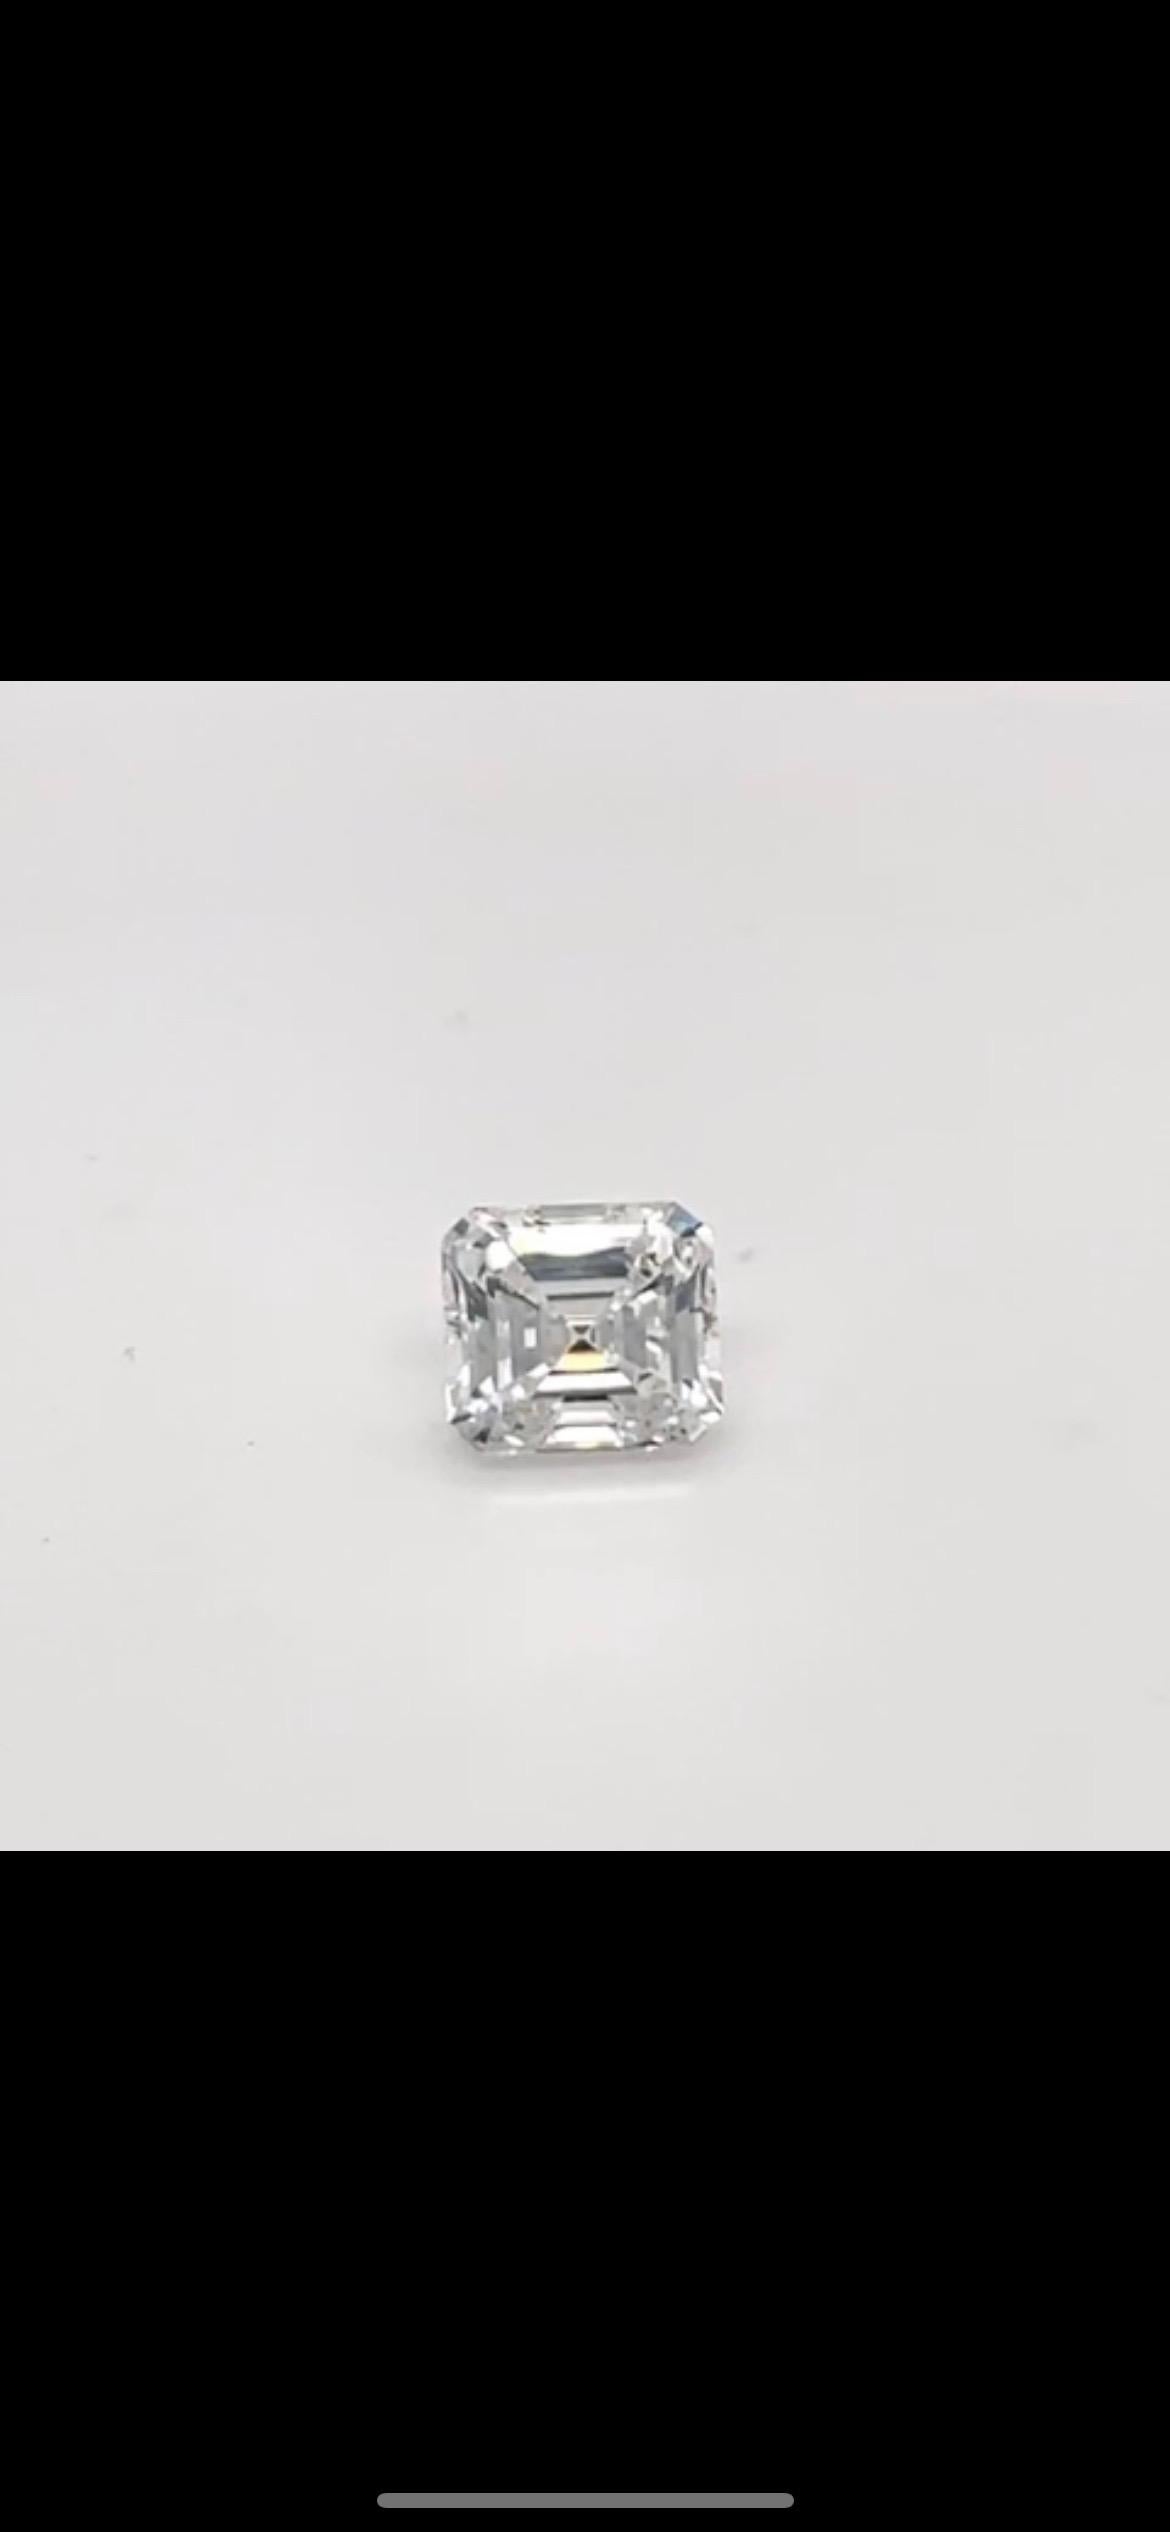 House of Diamonds New York GIA Certified Natural Diamond 2.4 carat Asher E VS1